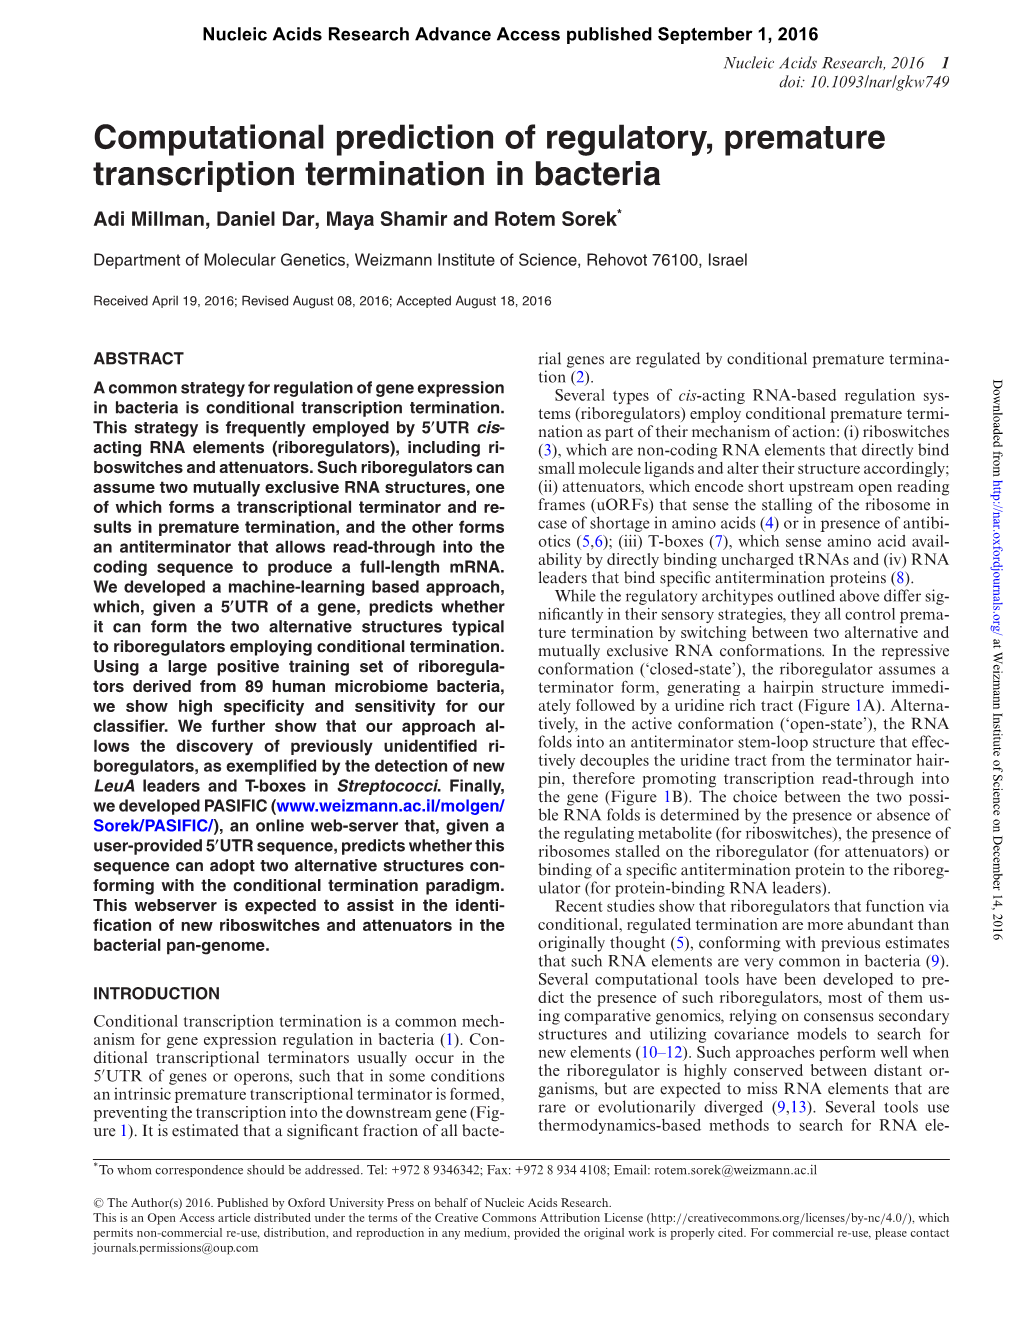 Computational Prediction of Regulatory, Premature Transcription Termination in Bacteria Adi Millman, Daniel Dar, Maya Shamir and Rotem Sorek*